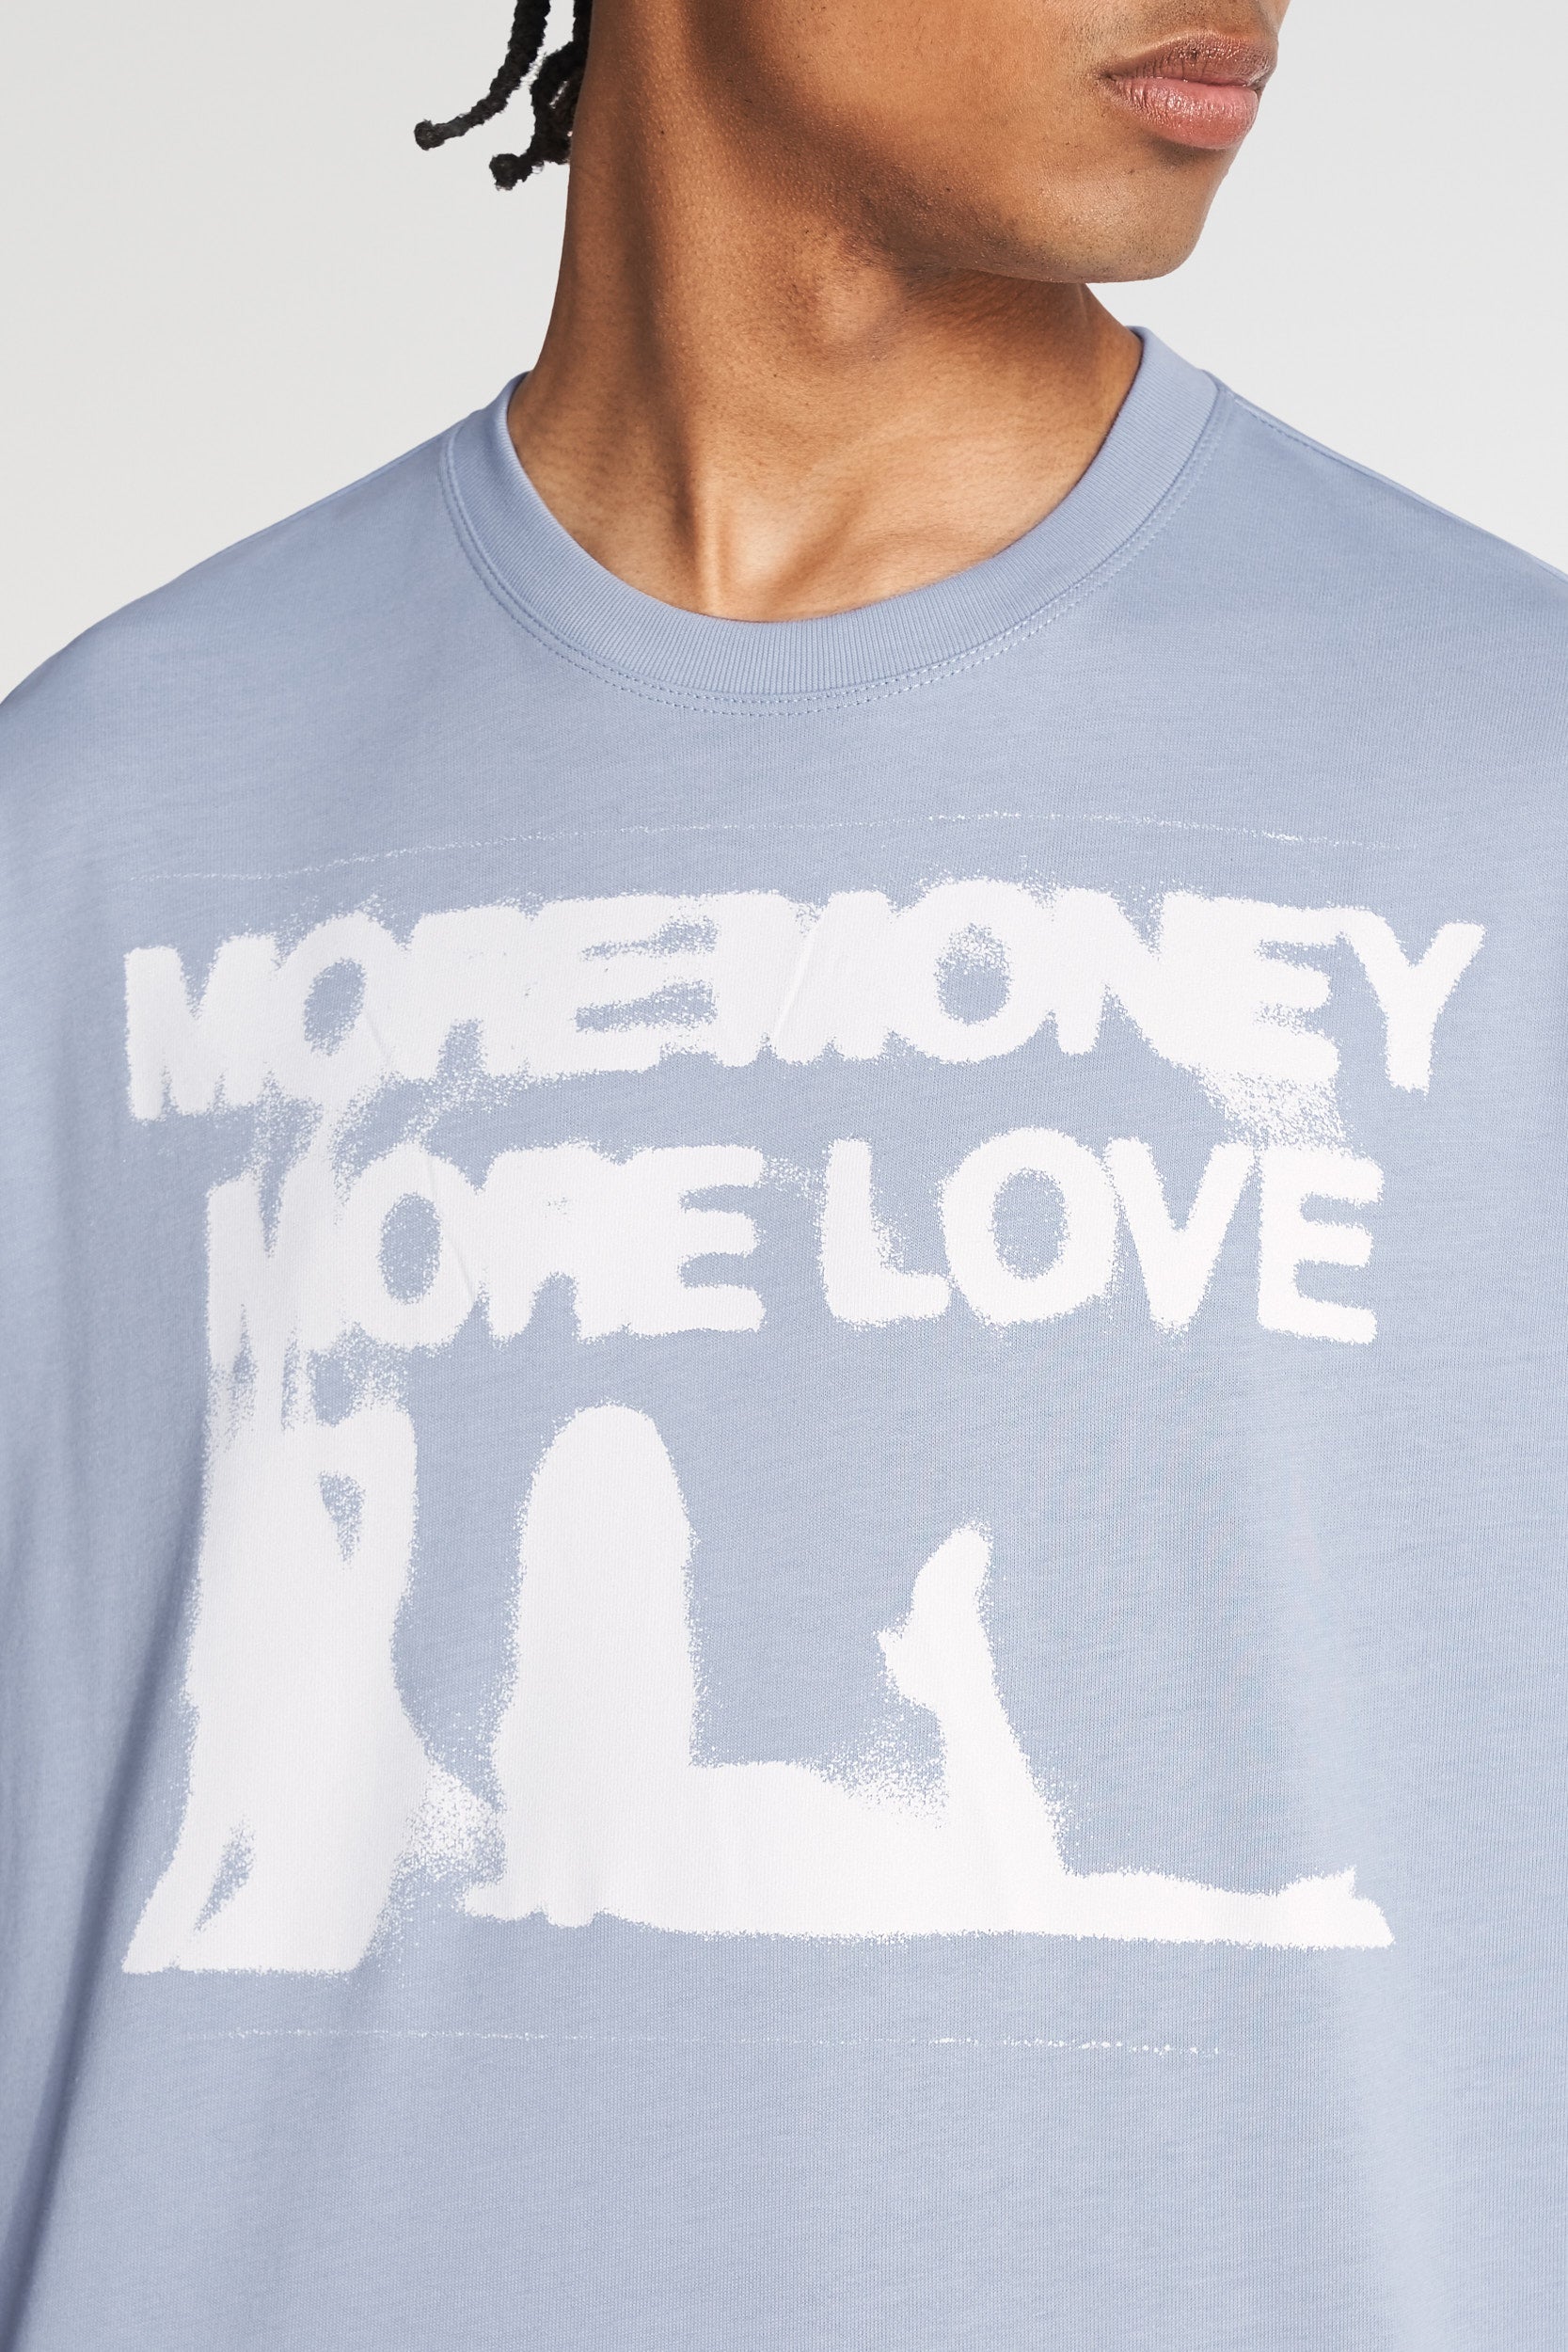 More Money More Love Wet Dream Zen Blue Tee – MORE MONEY MORE LOVE